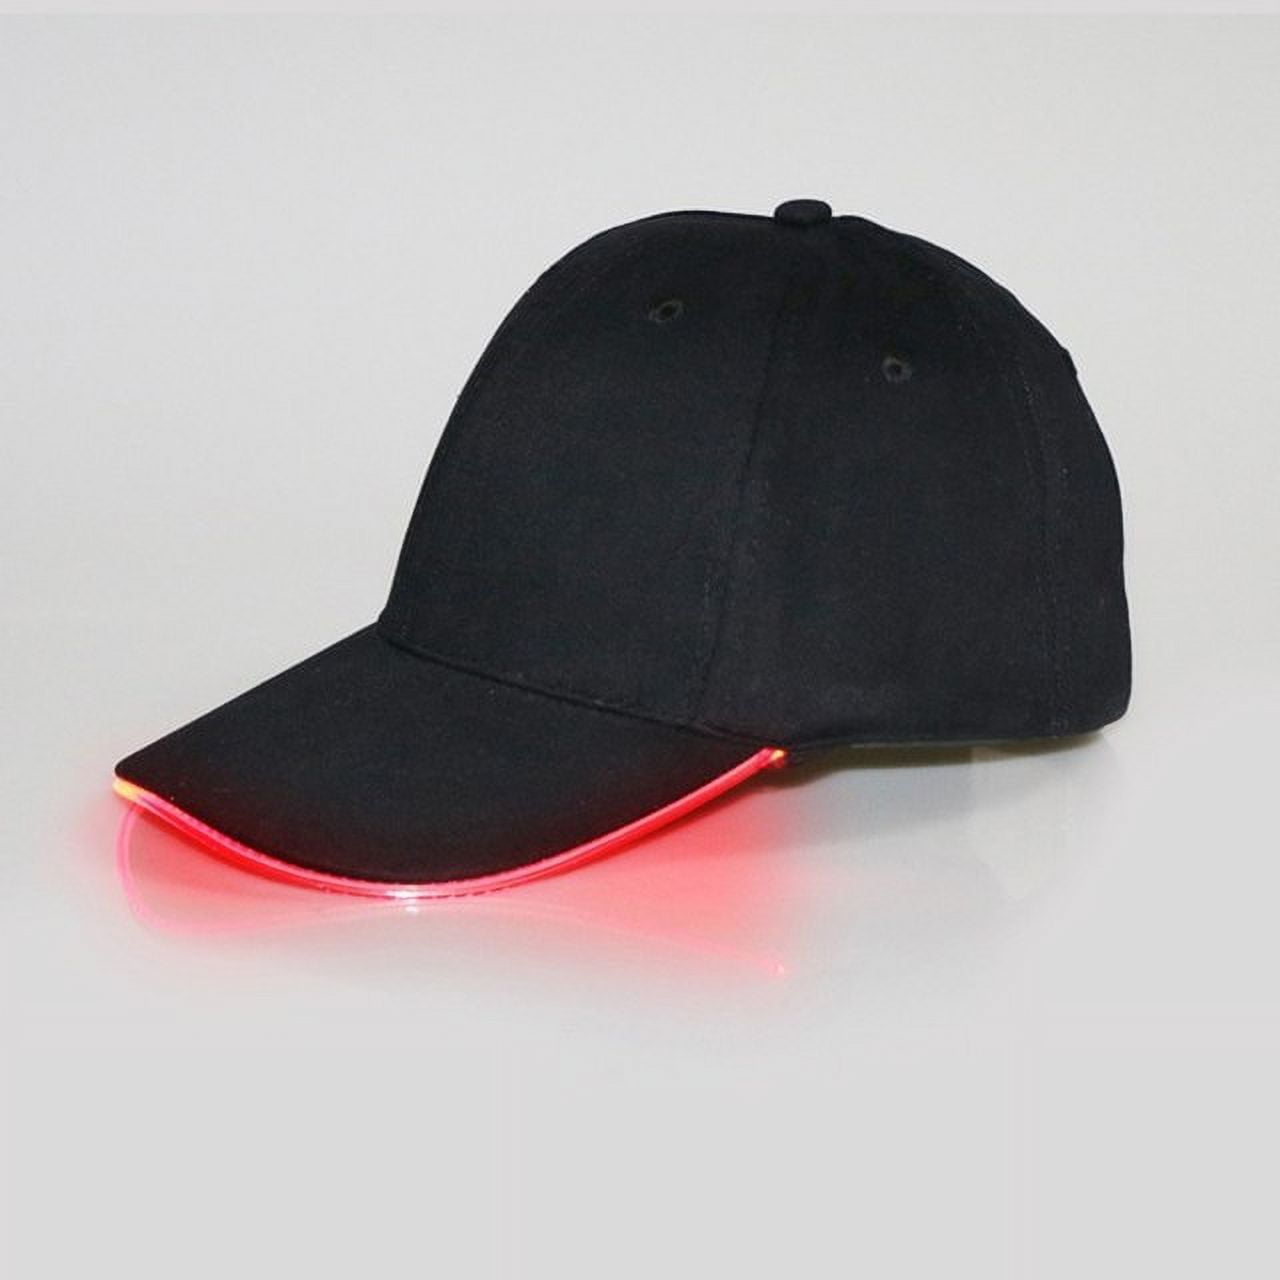 CoCopeaunts New LED Light Up Baseball Cap Glowing Adjustable Sun Hats For  Women Men Night Running Caps 